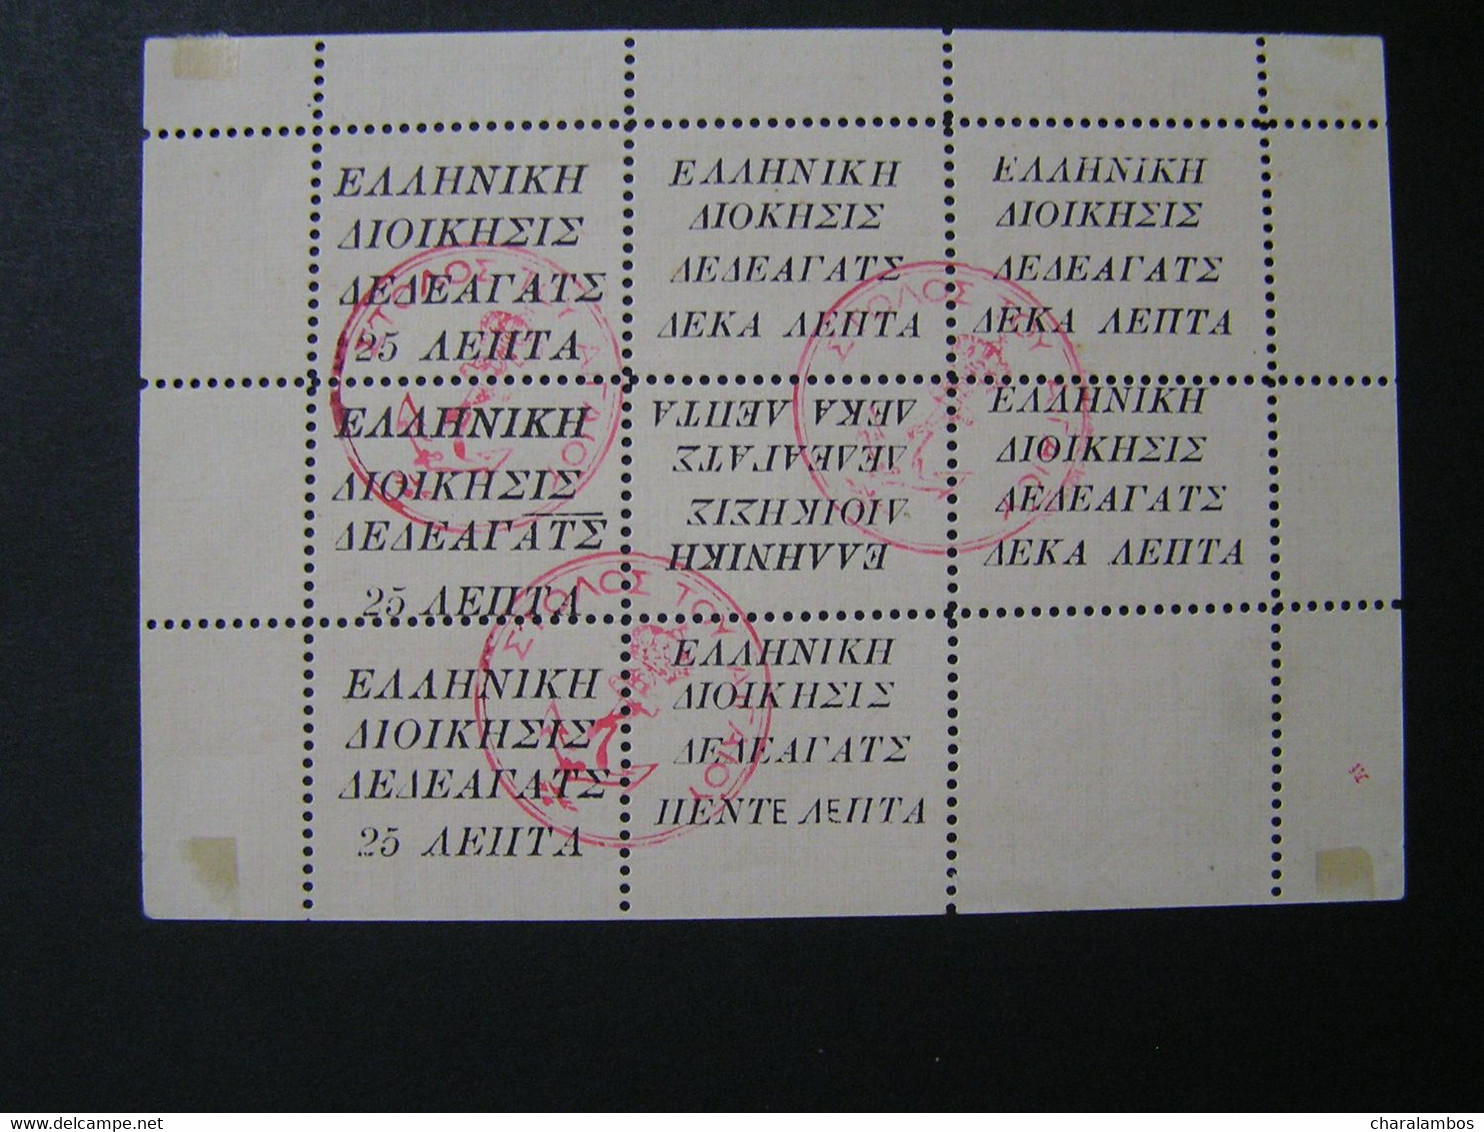 GREECE-Dedeagatch 1st Label Issue SHEETLET F6 San Gom Sheetlets Or Stamps Of Wat.. - Dédéagh